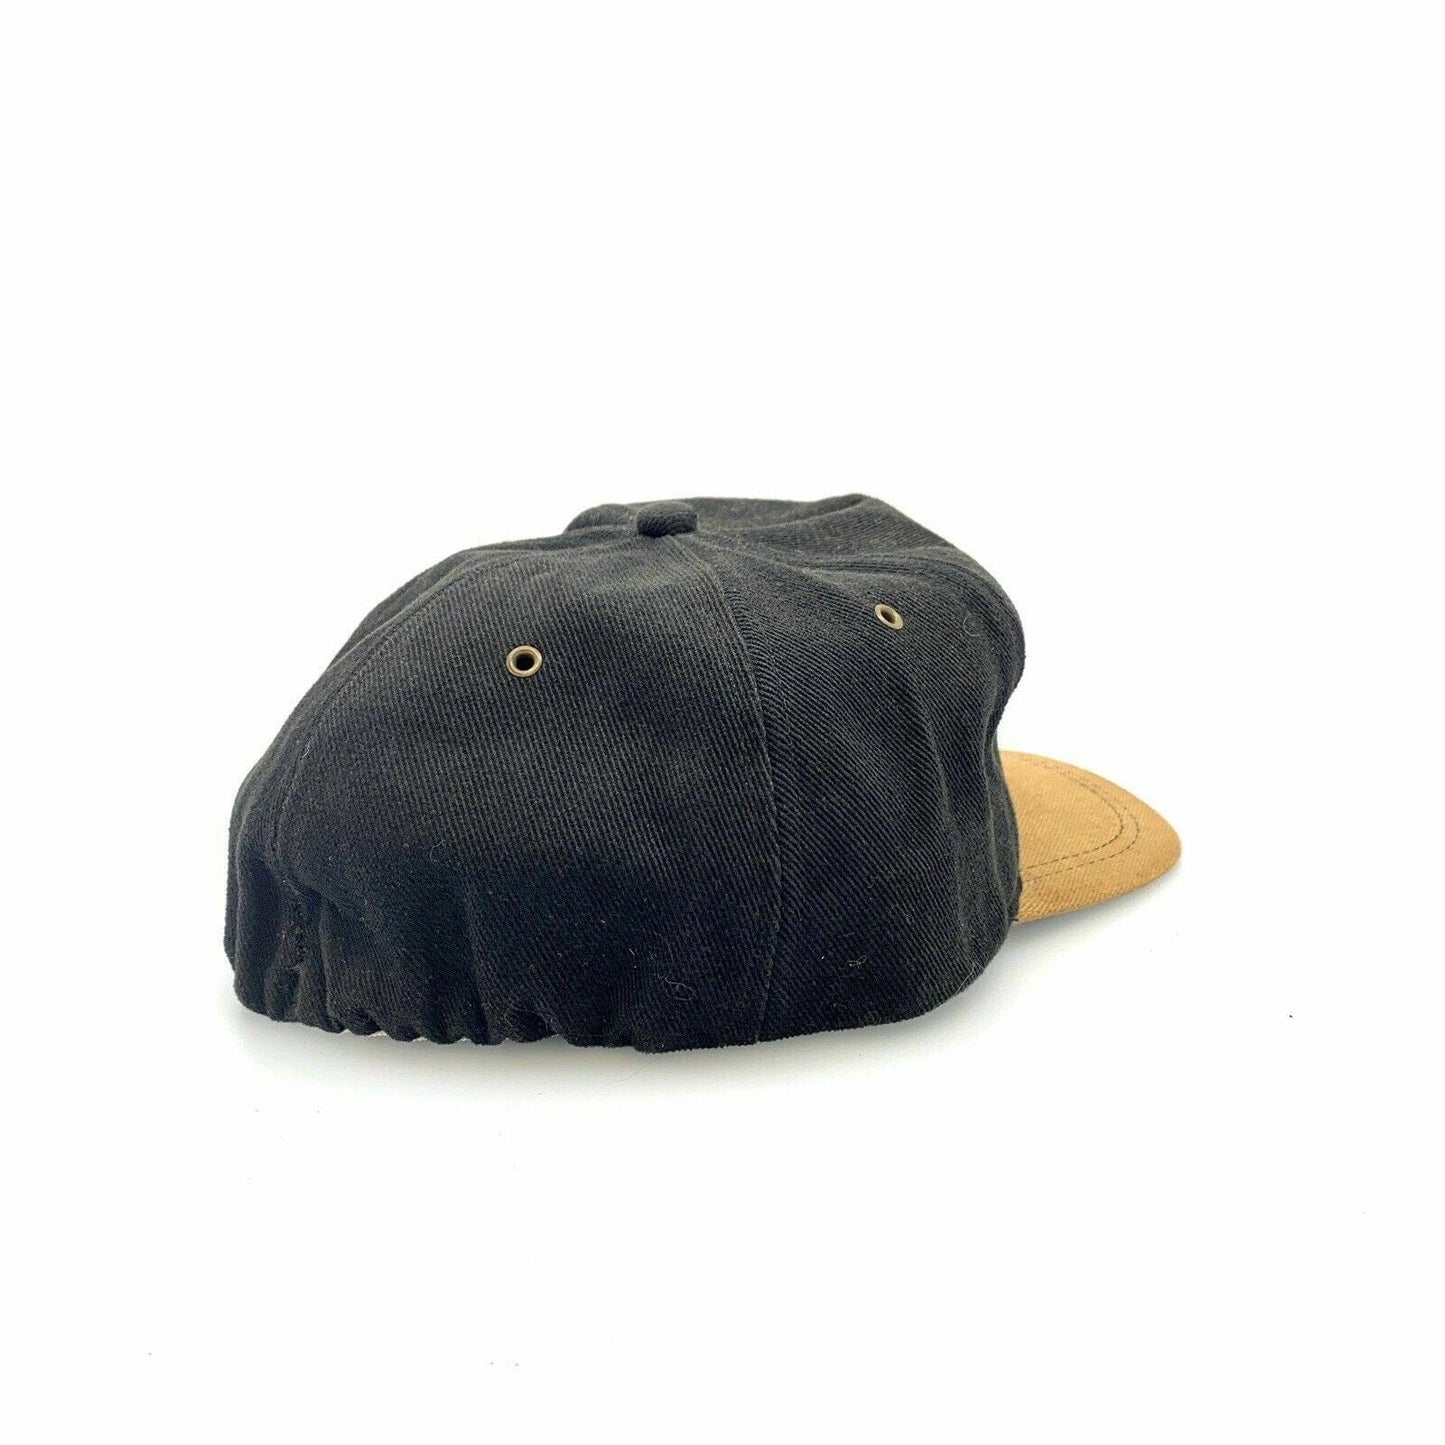 K Products Tour Cap FARMLAND Fitted Hat, Black / Brown - Size M/L - parsimonyshoppes